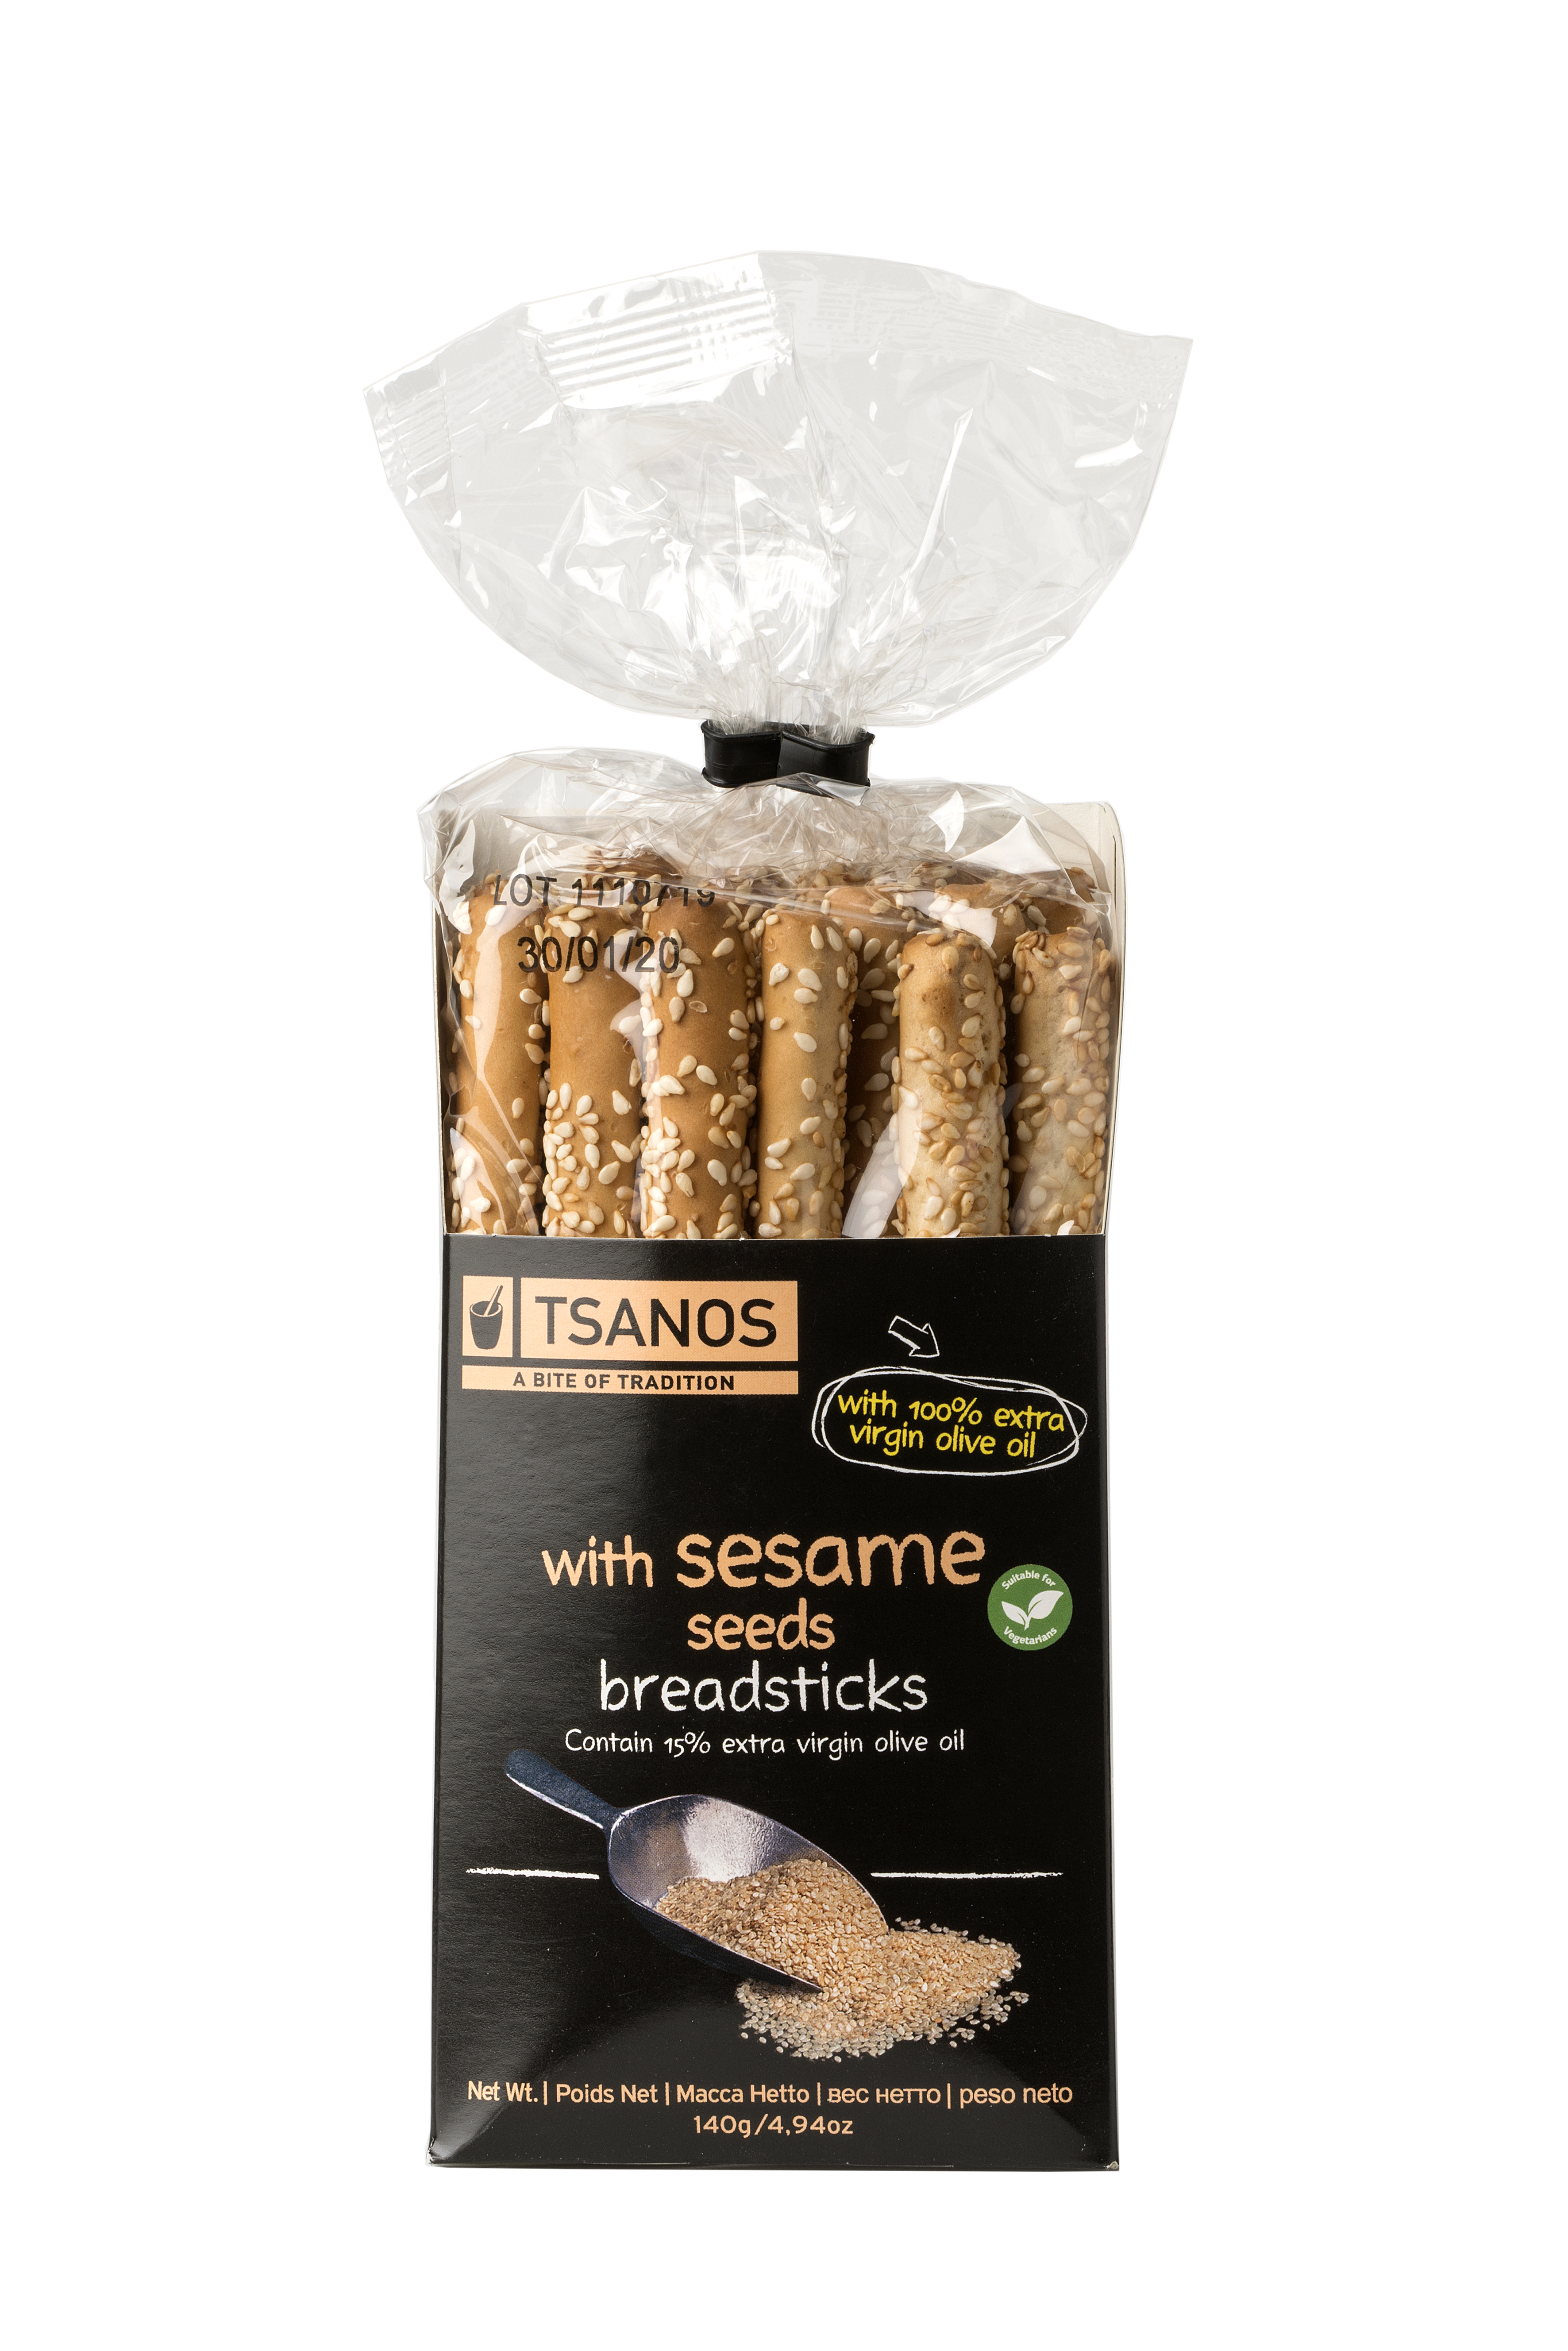 Breadsticks with sesame seeds